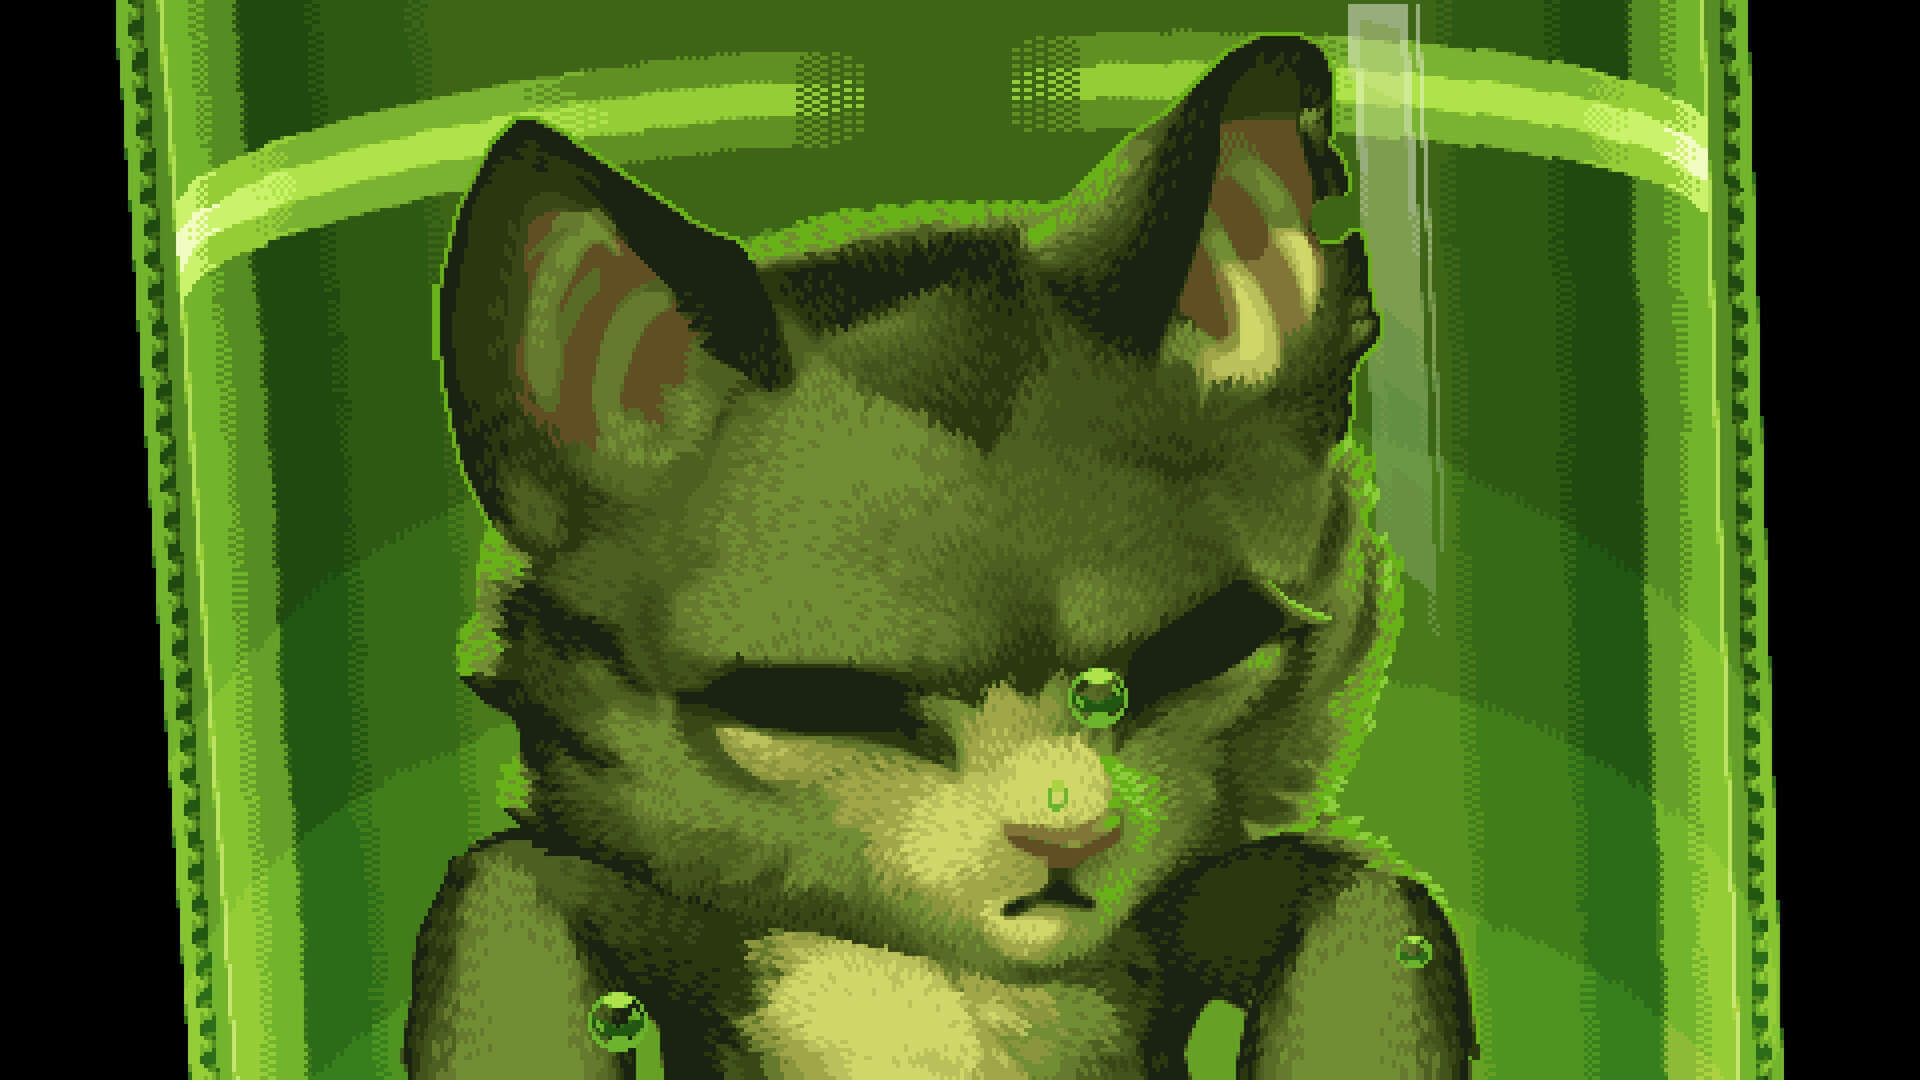 Análise Super Catboy: finalmente o jogo do gato aparece no DELFOS - Delfos